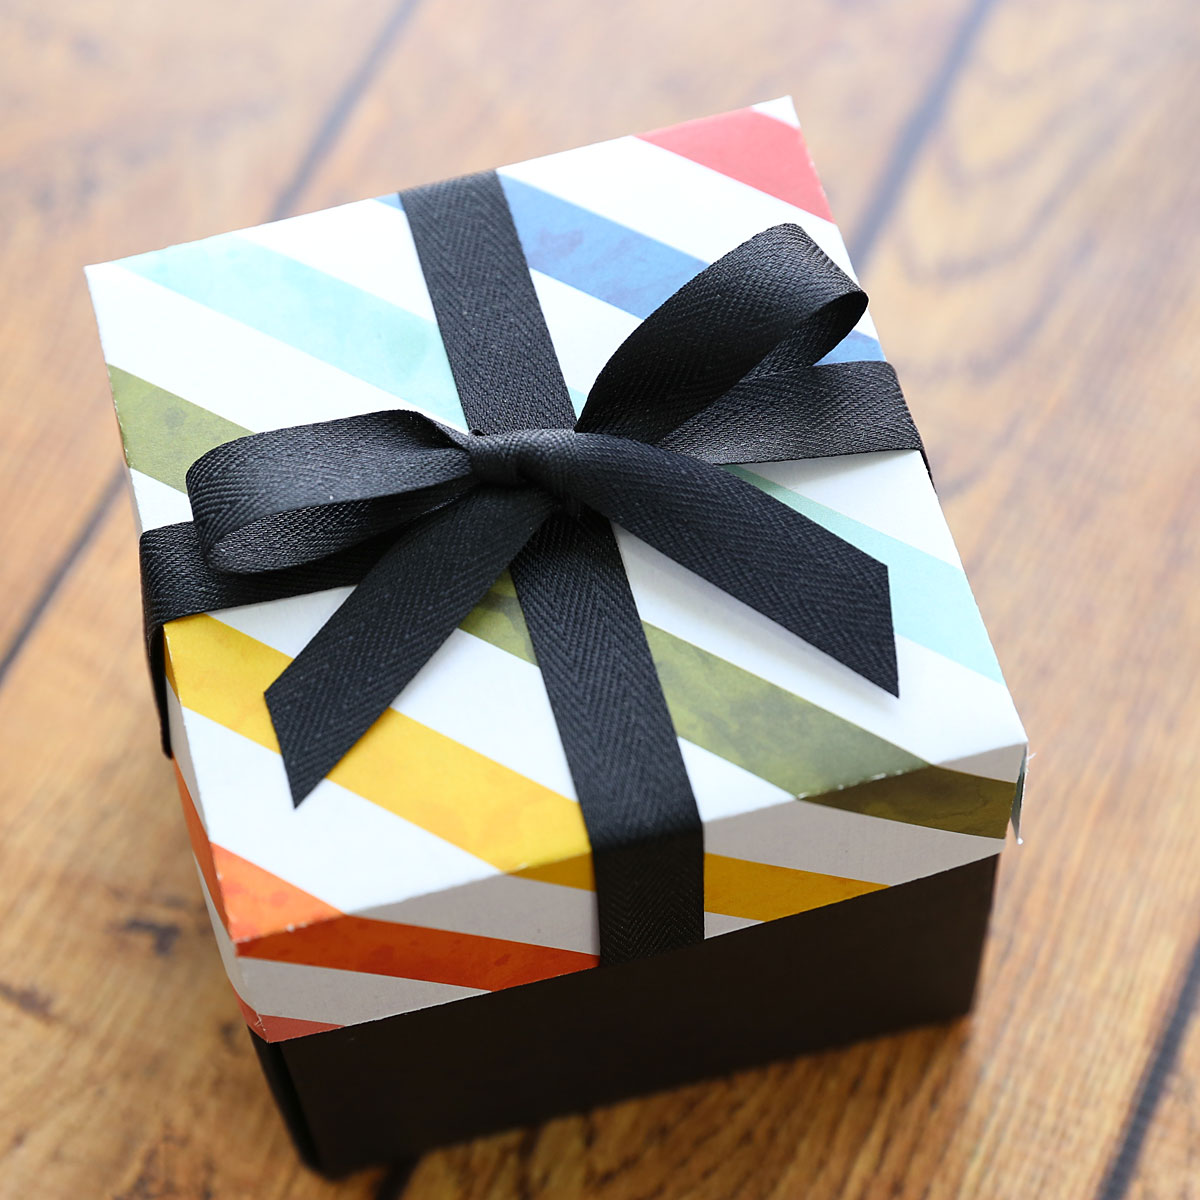 Surprise Explosion Box Love Memory DIY Photo Album Birthday Anniversary Gift  AU | eBay